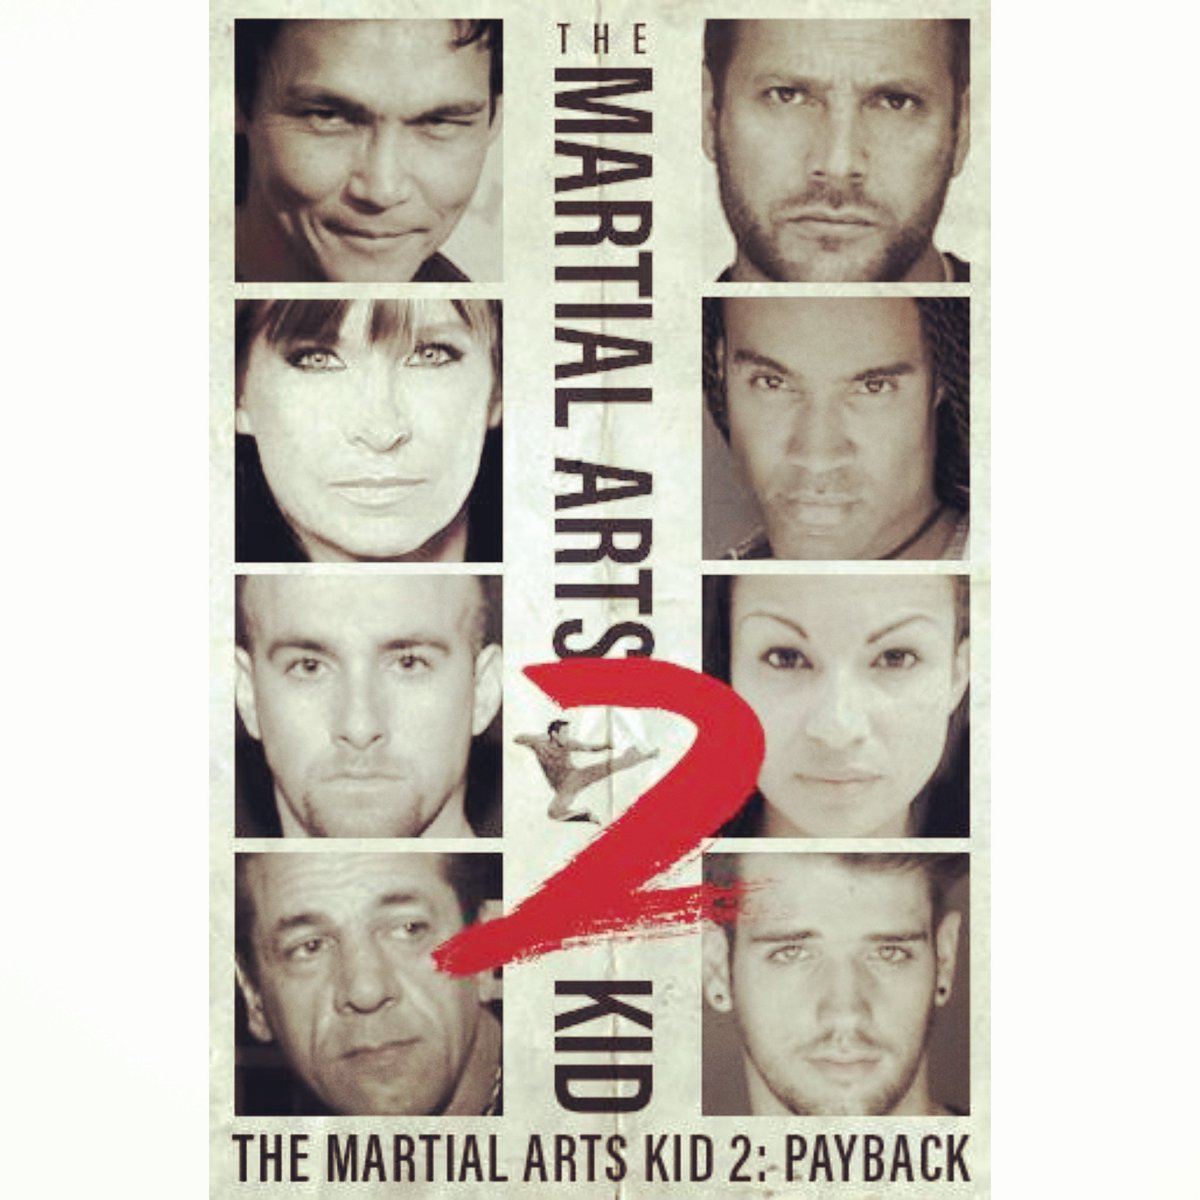 Martial Arts Kid 2. Payback
Coming Soon...
#themartialartskid #film #action #martialarts #karate #kungfu #mma